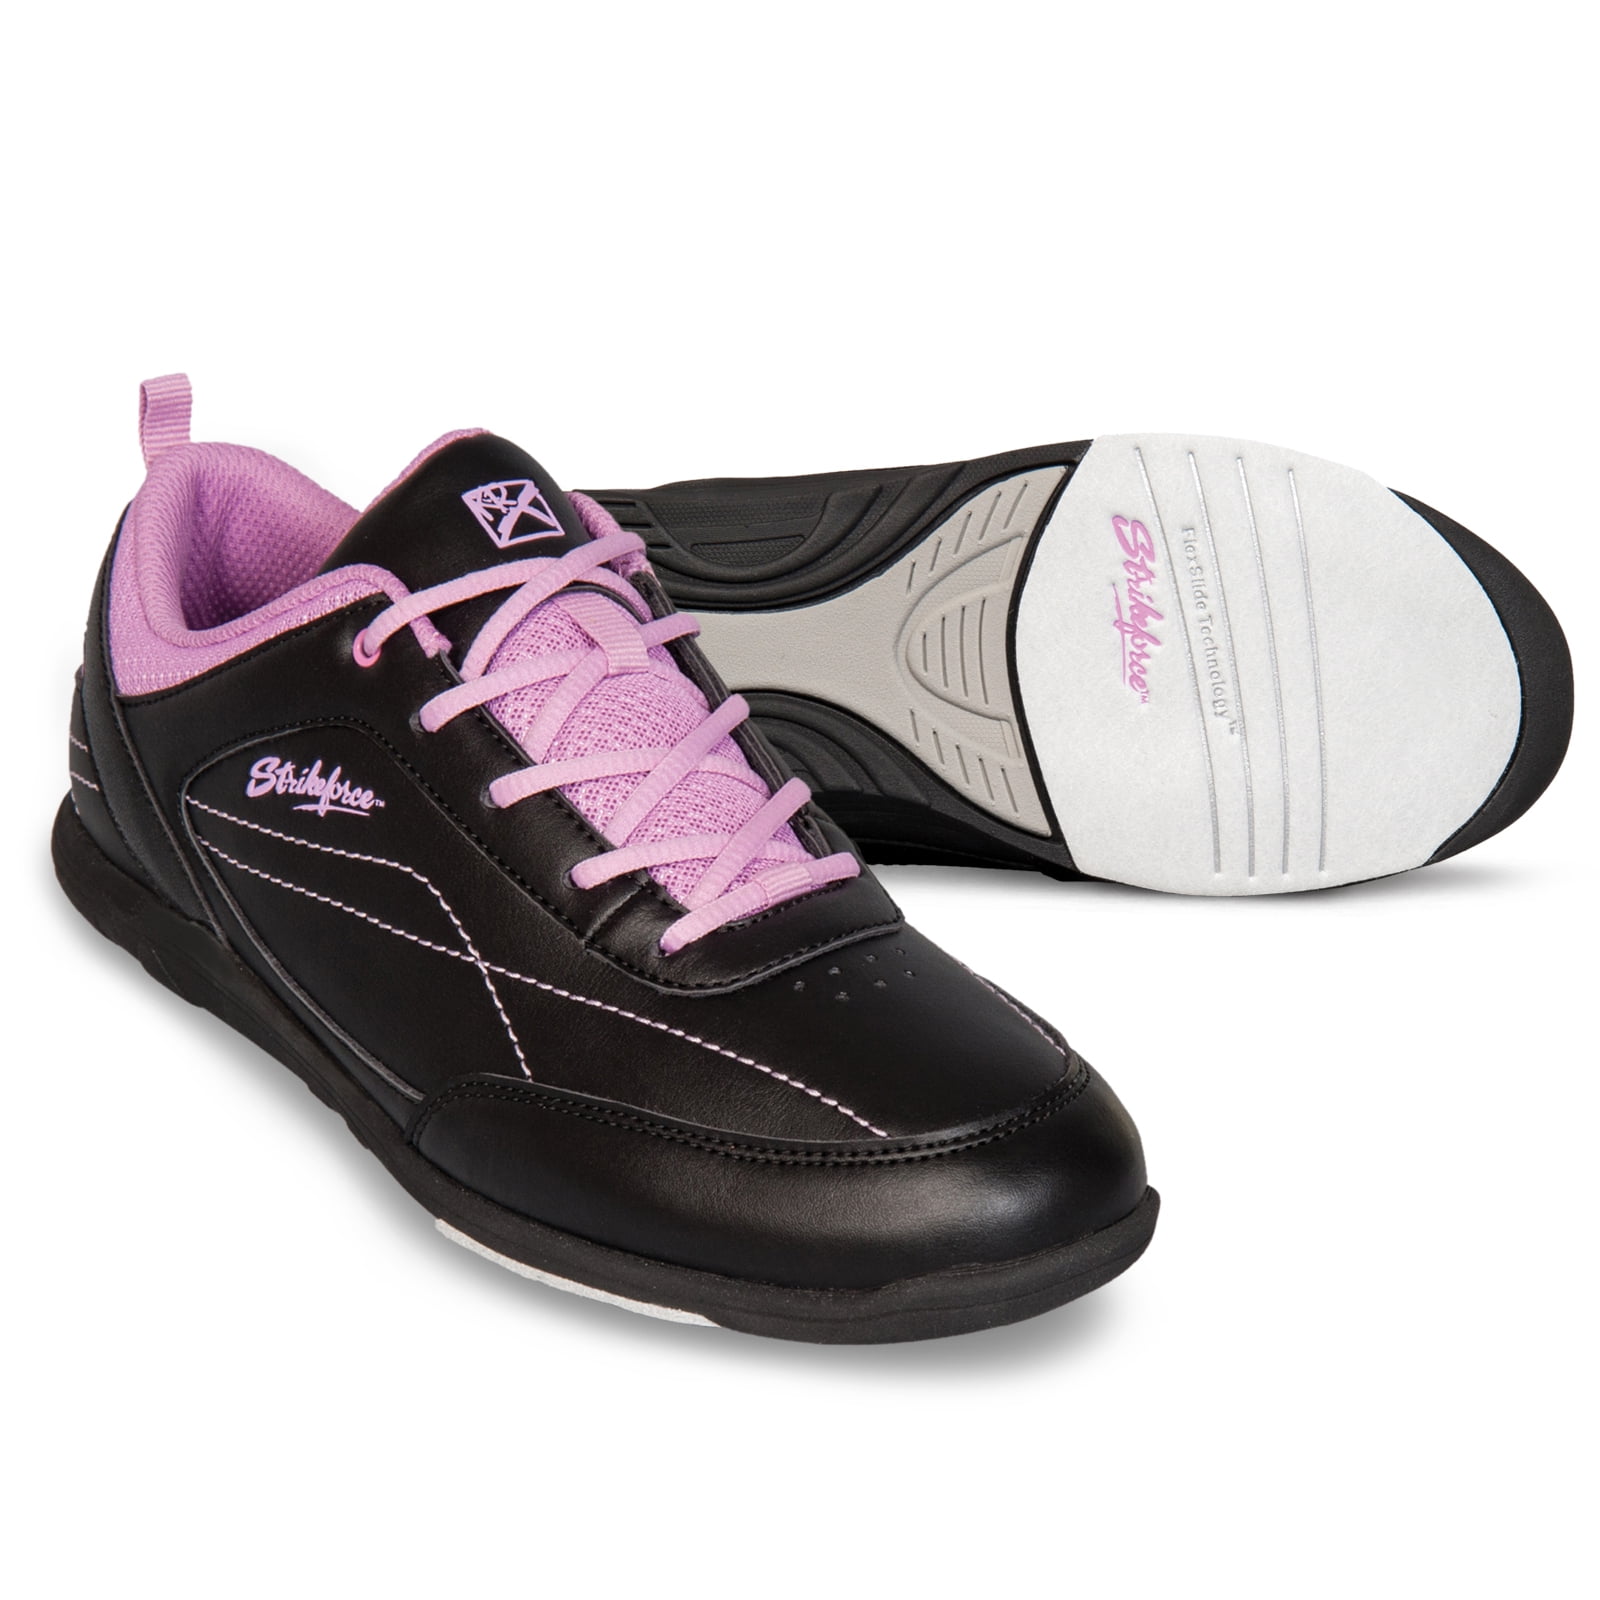 KR Strikeforce Lace Purple/Yellow Womens Bowling Shoes Size 7.5 